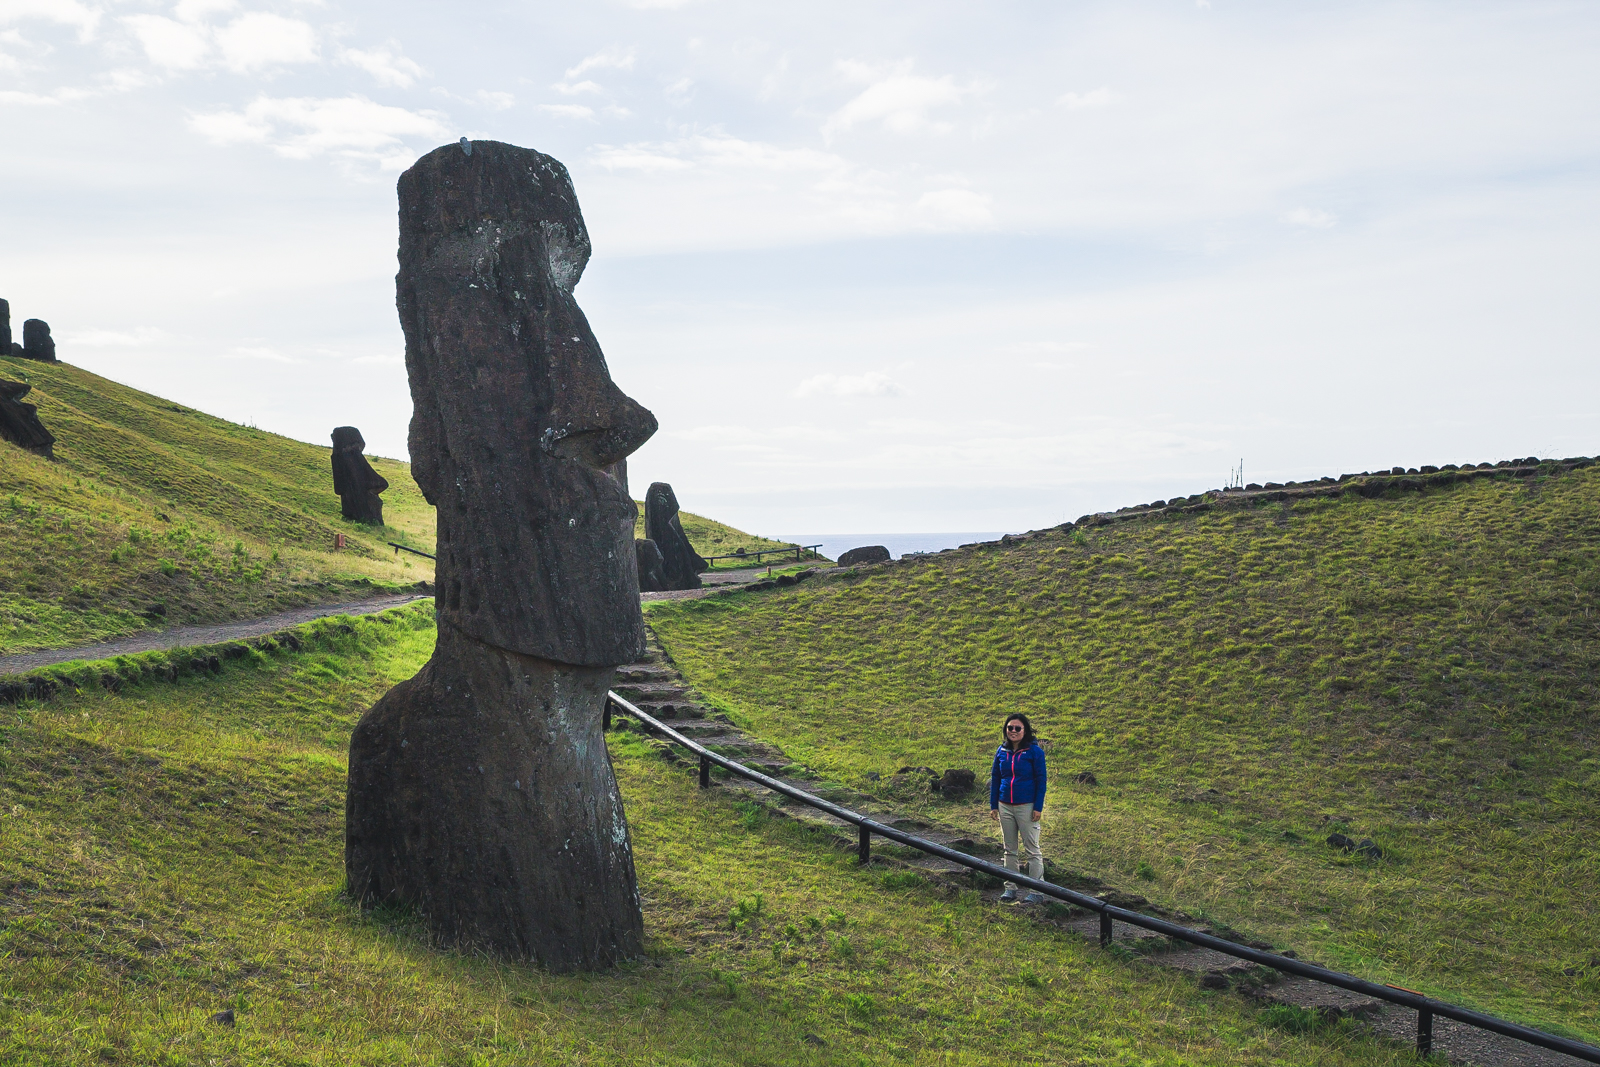 Big Moai at Rano Raraku, Easter Island